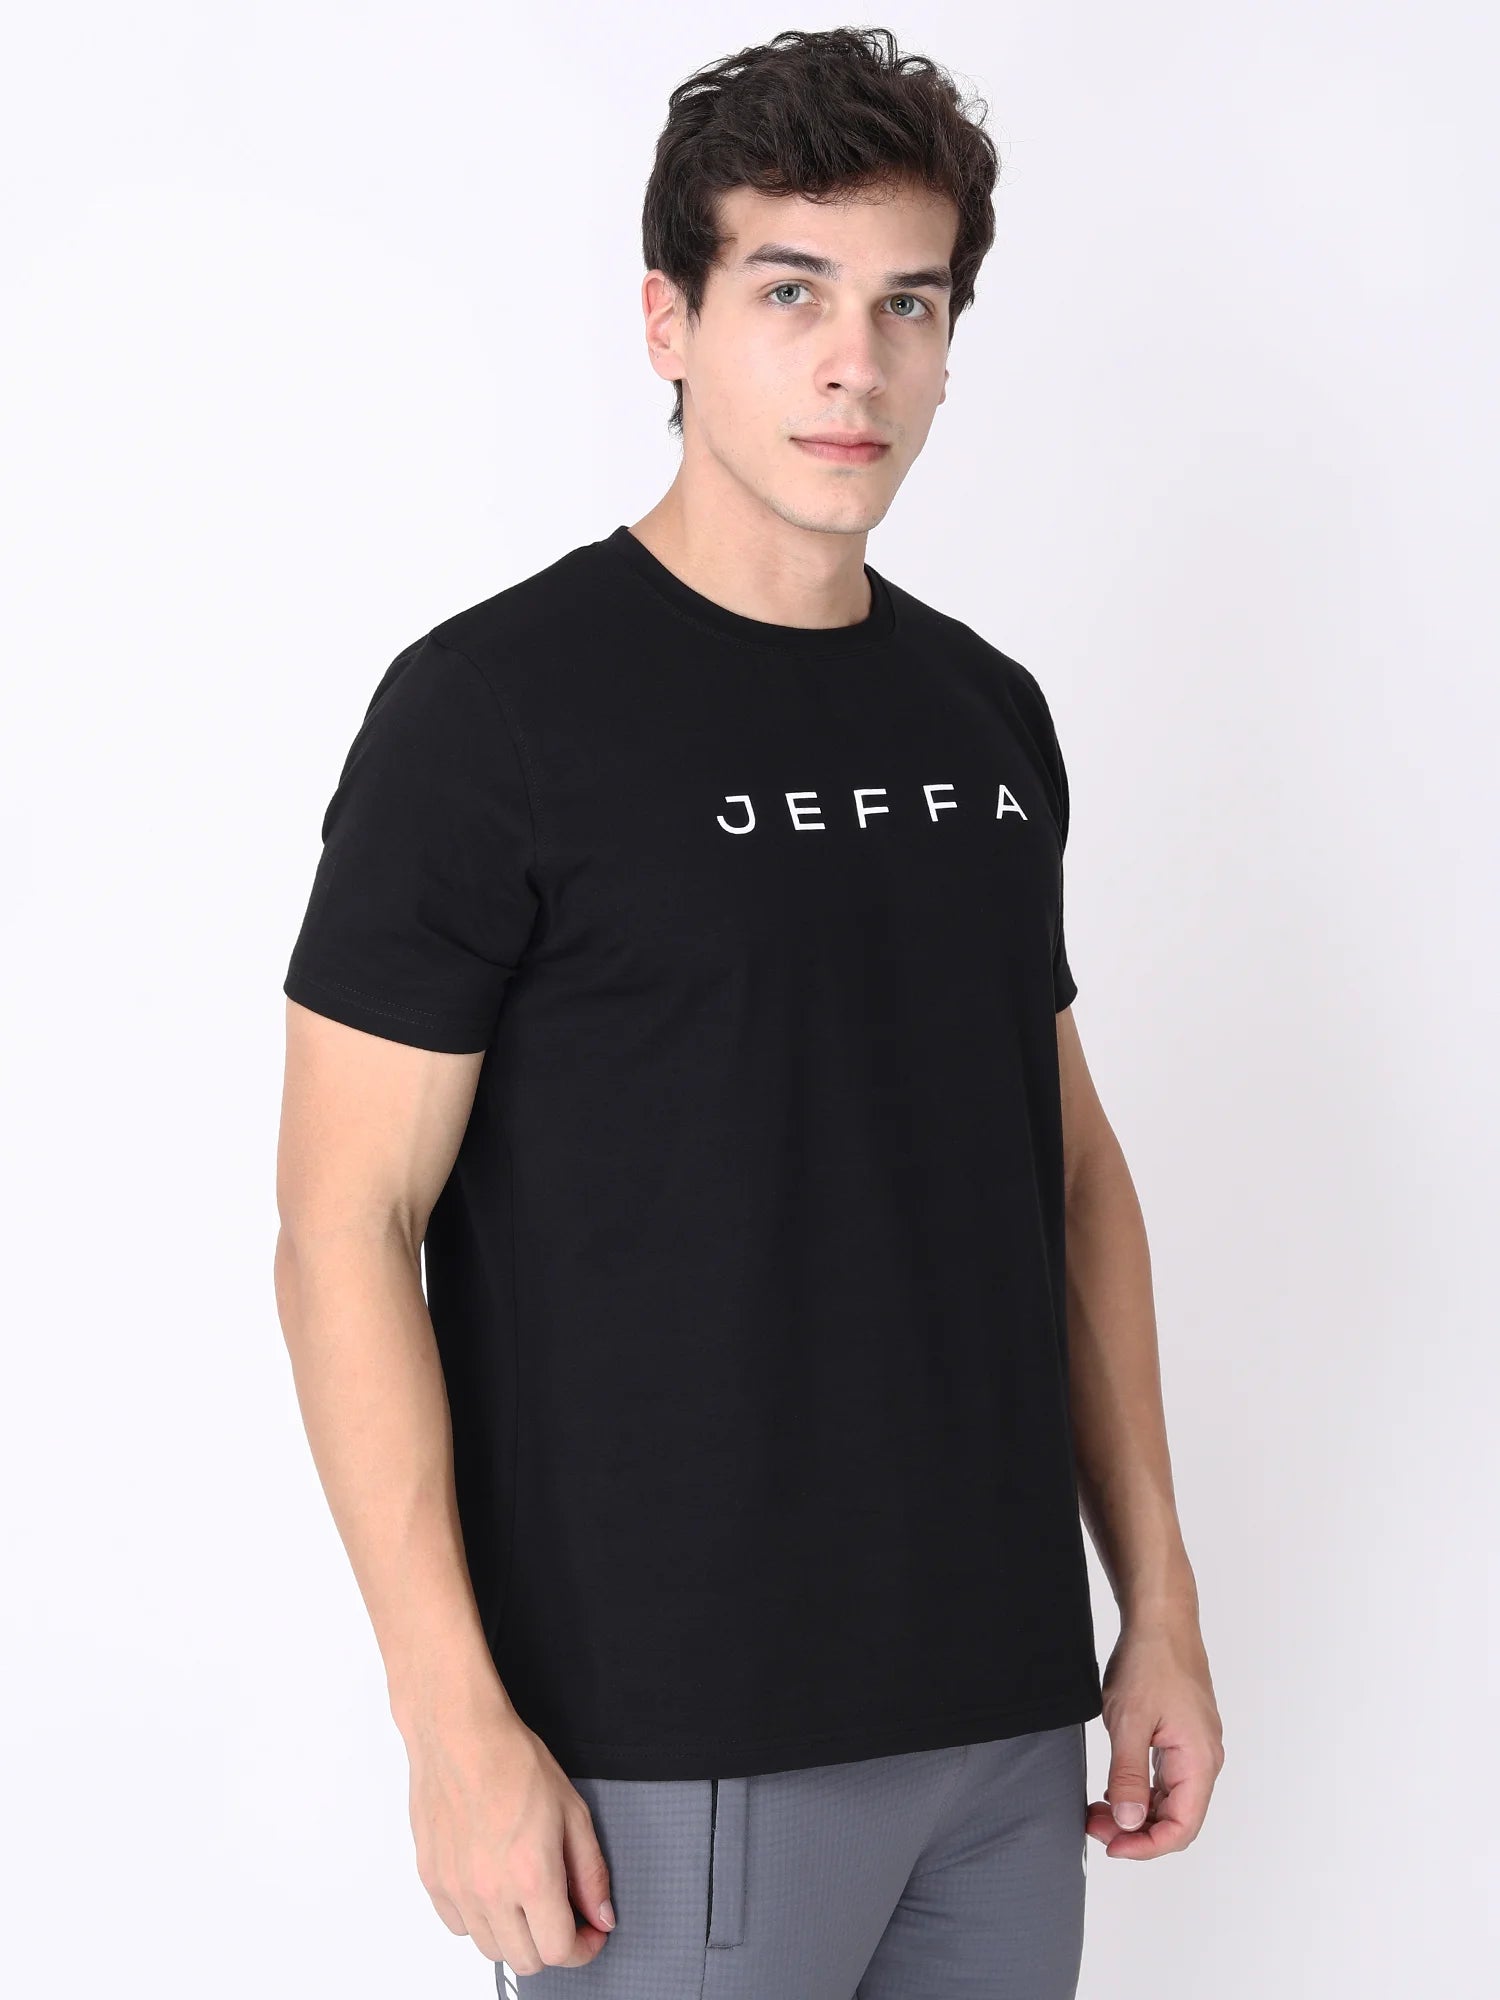 Jeffa Soft Cotton T-shirt in Black